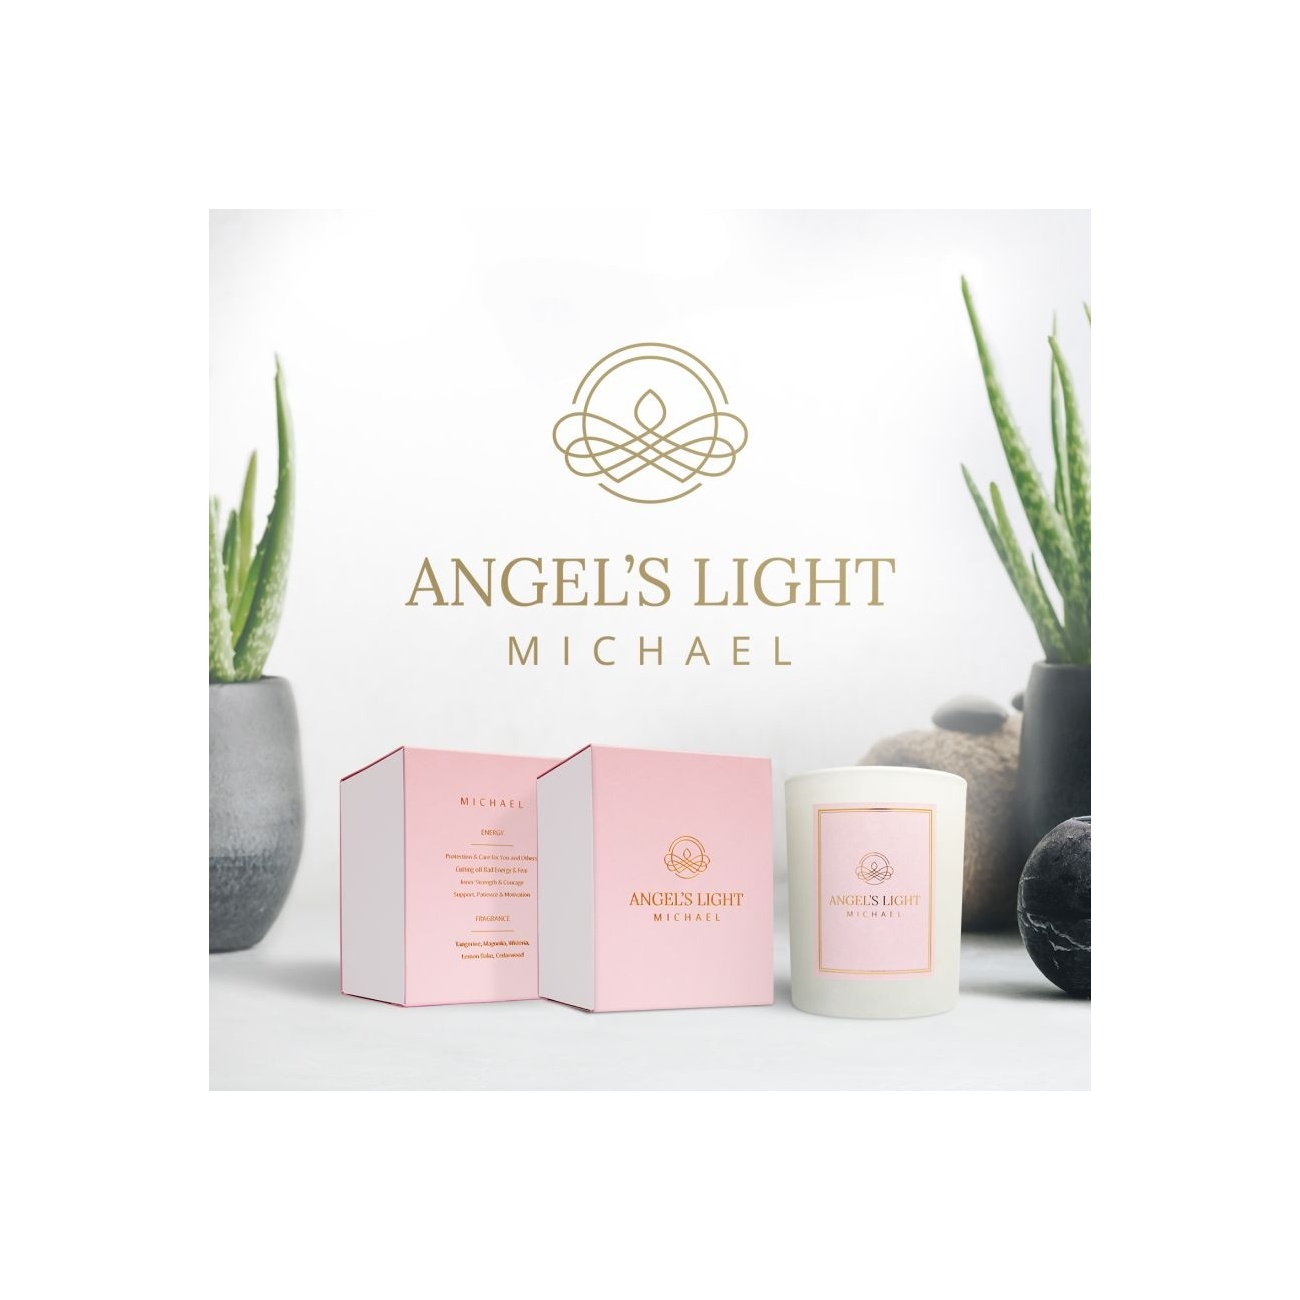 angels_light-michael-cotton_4_lifestyle_2